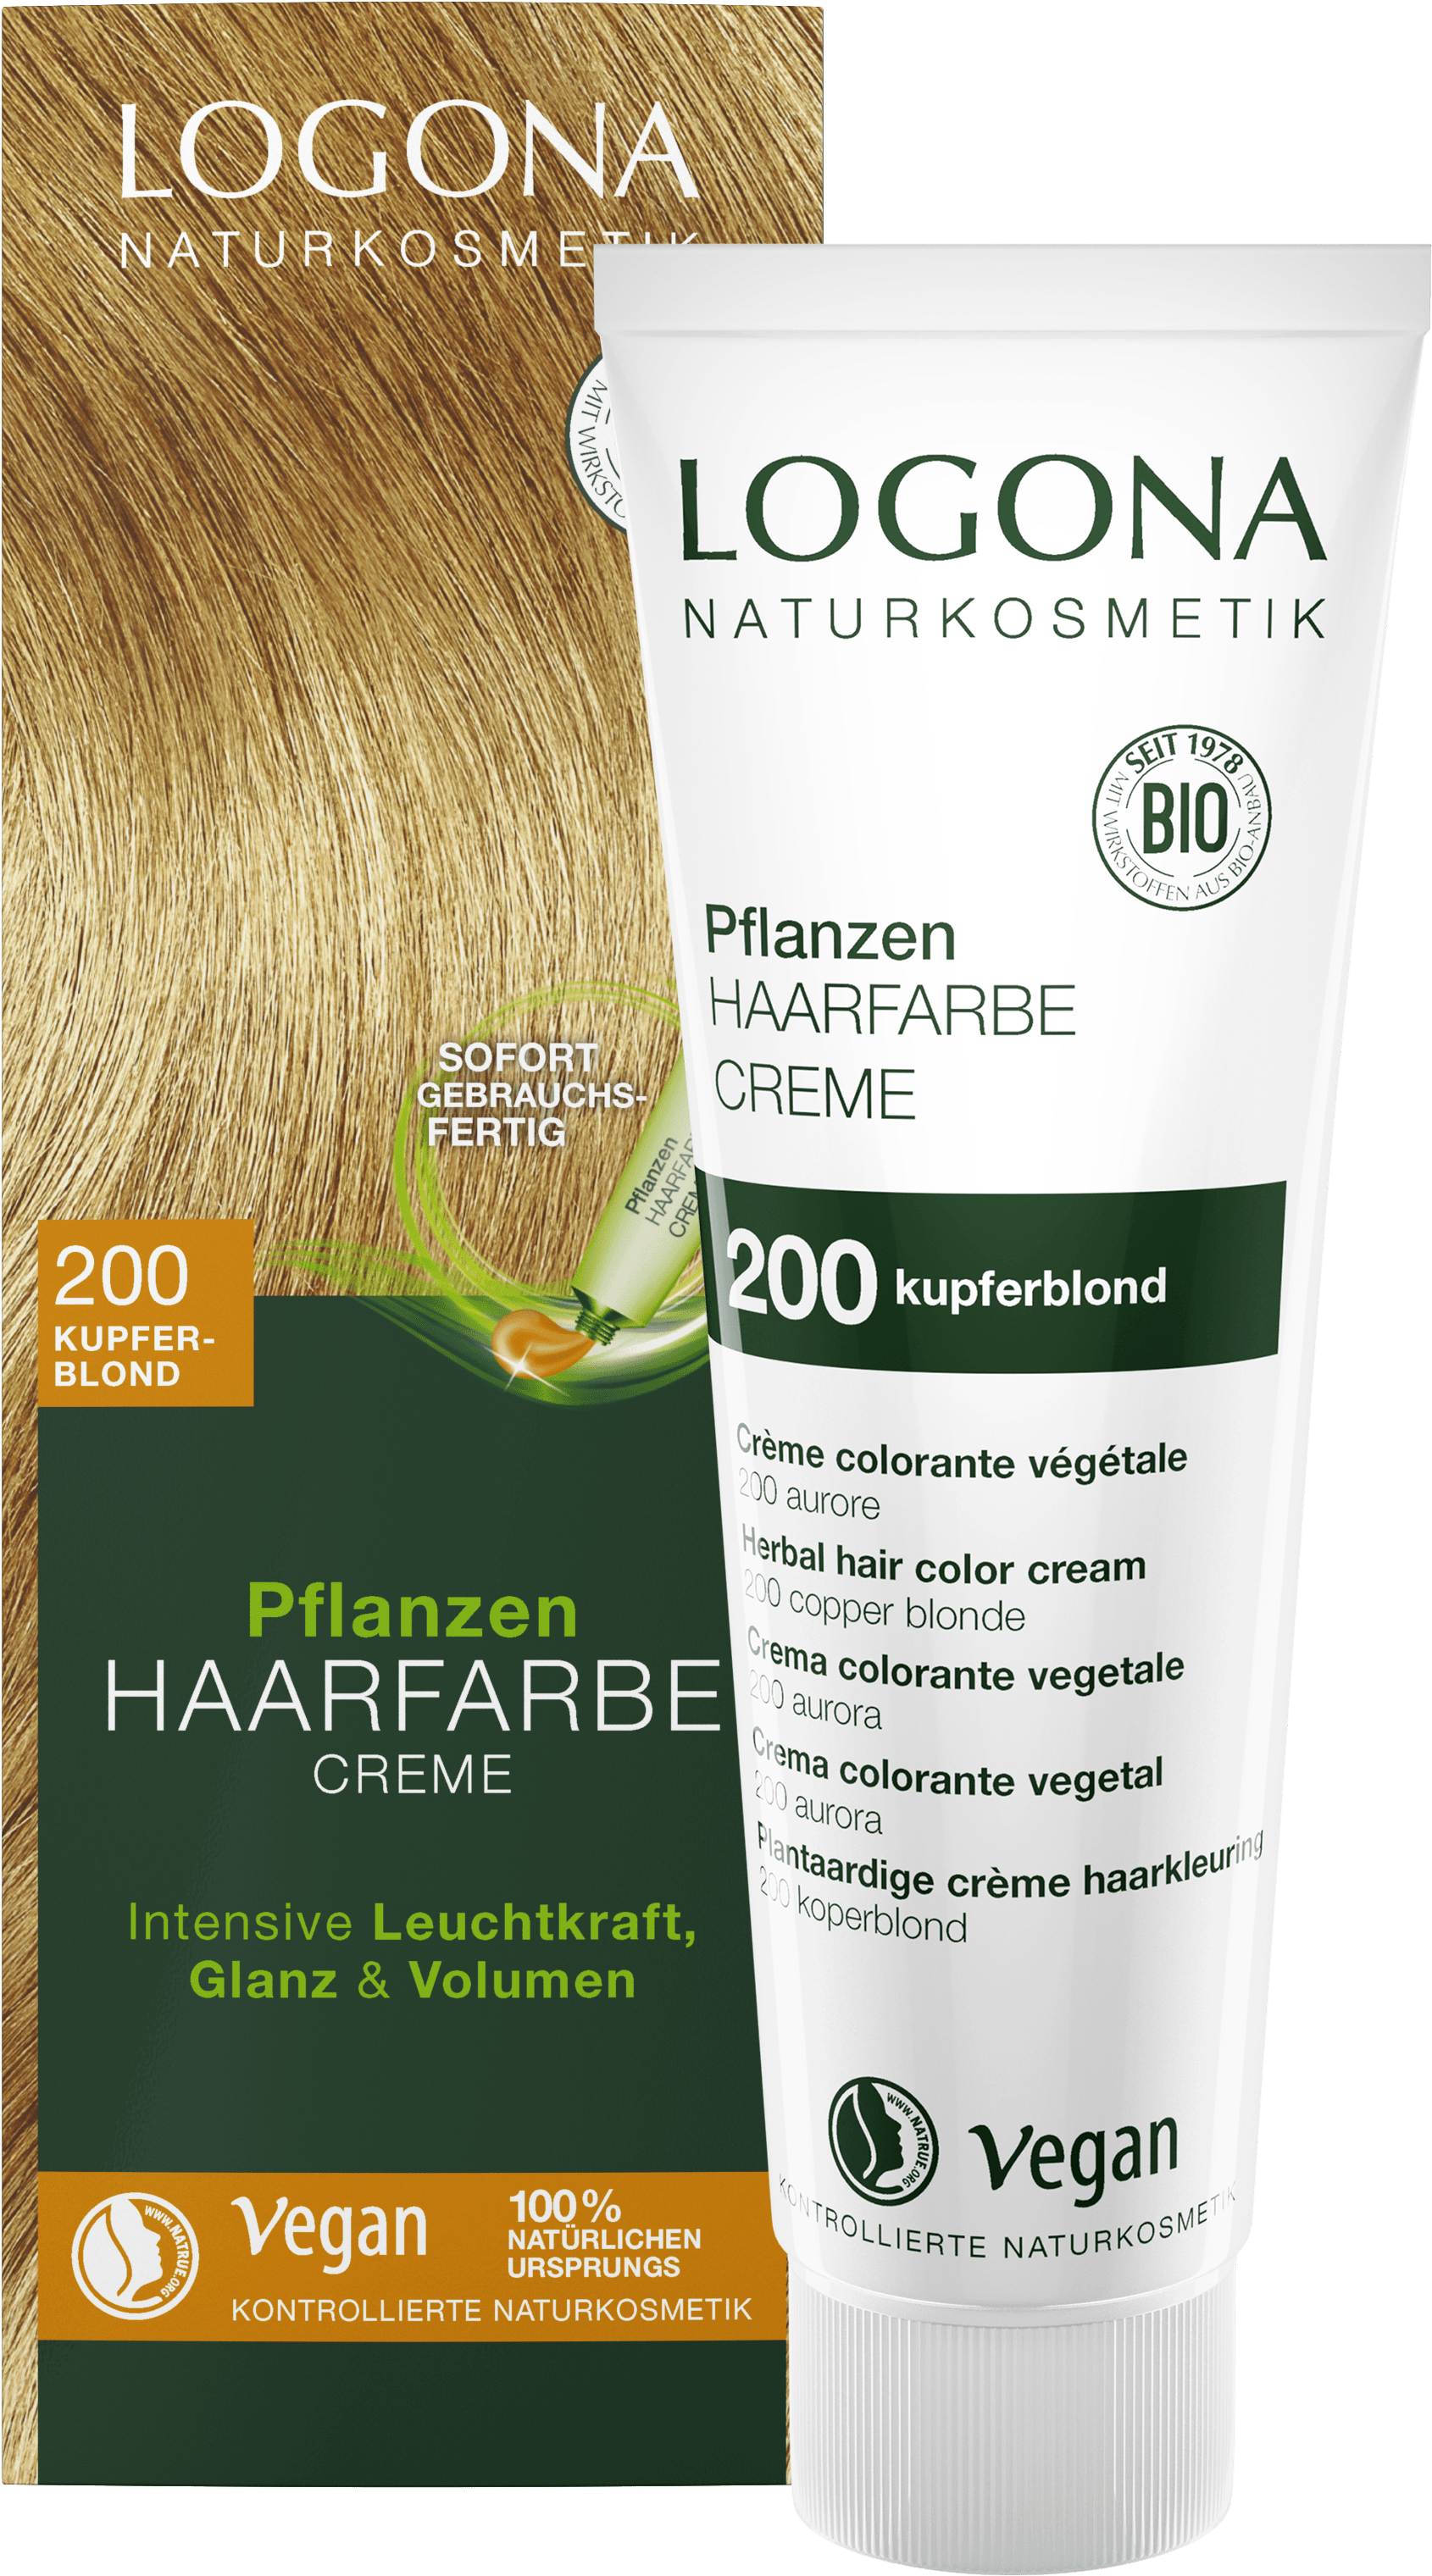 Pflanzen-Haarfarbe Creme 200 Kupferblond | LOGONA Naturkosmetik